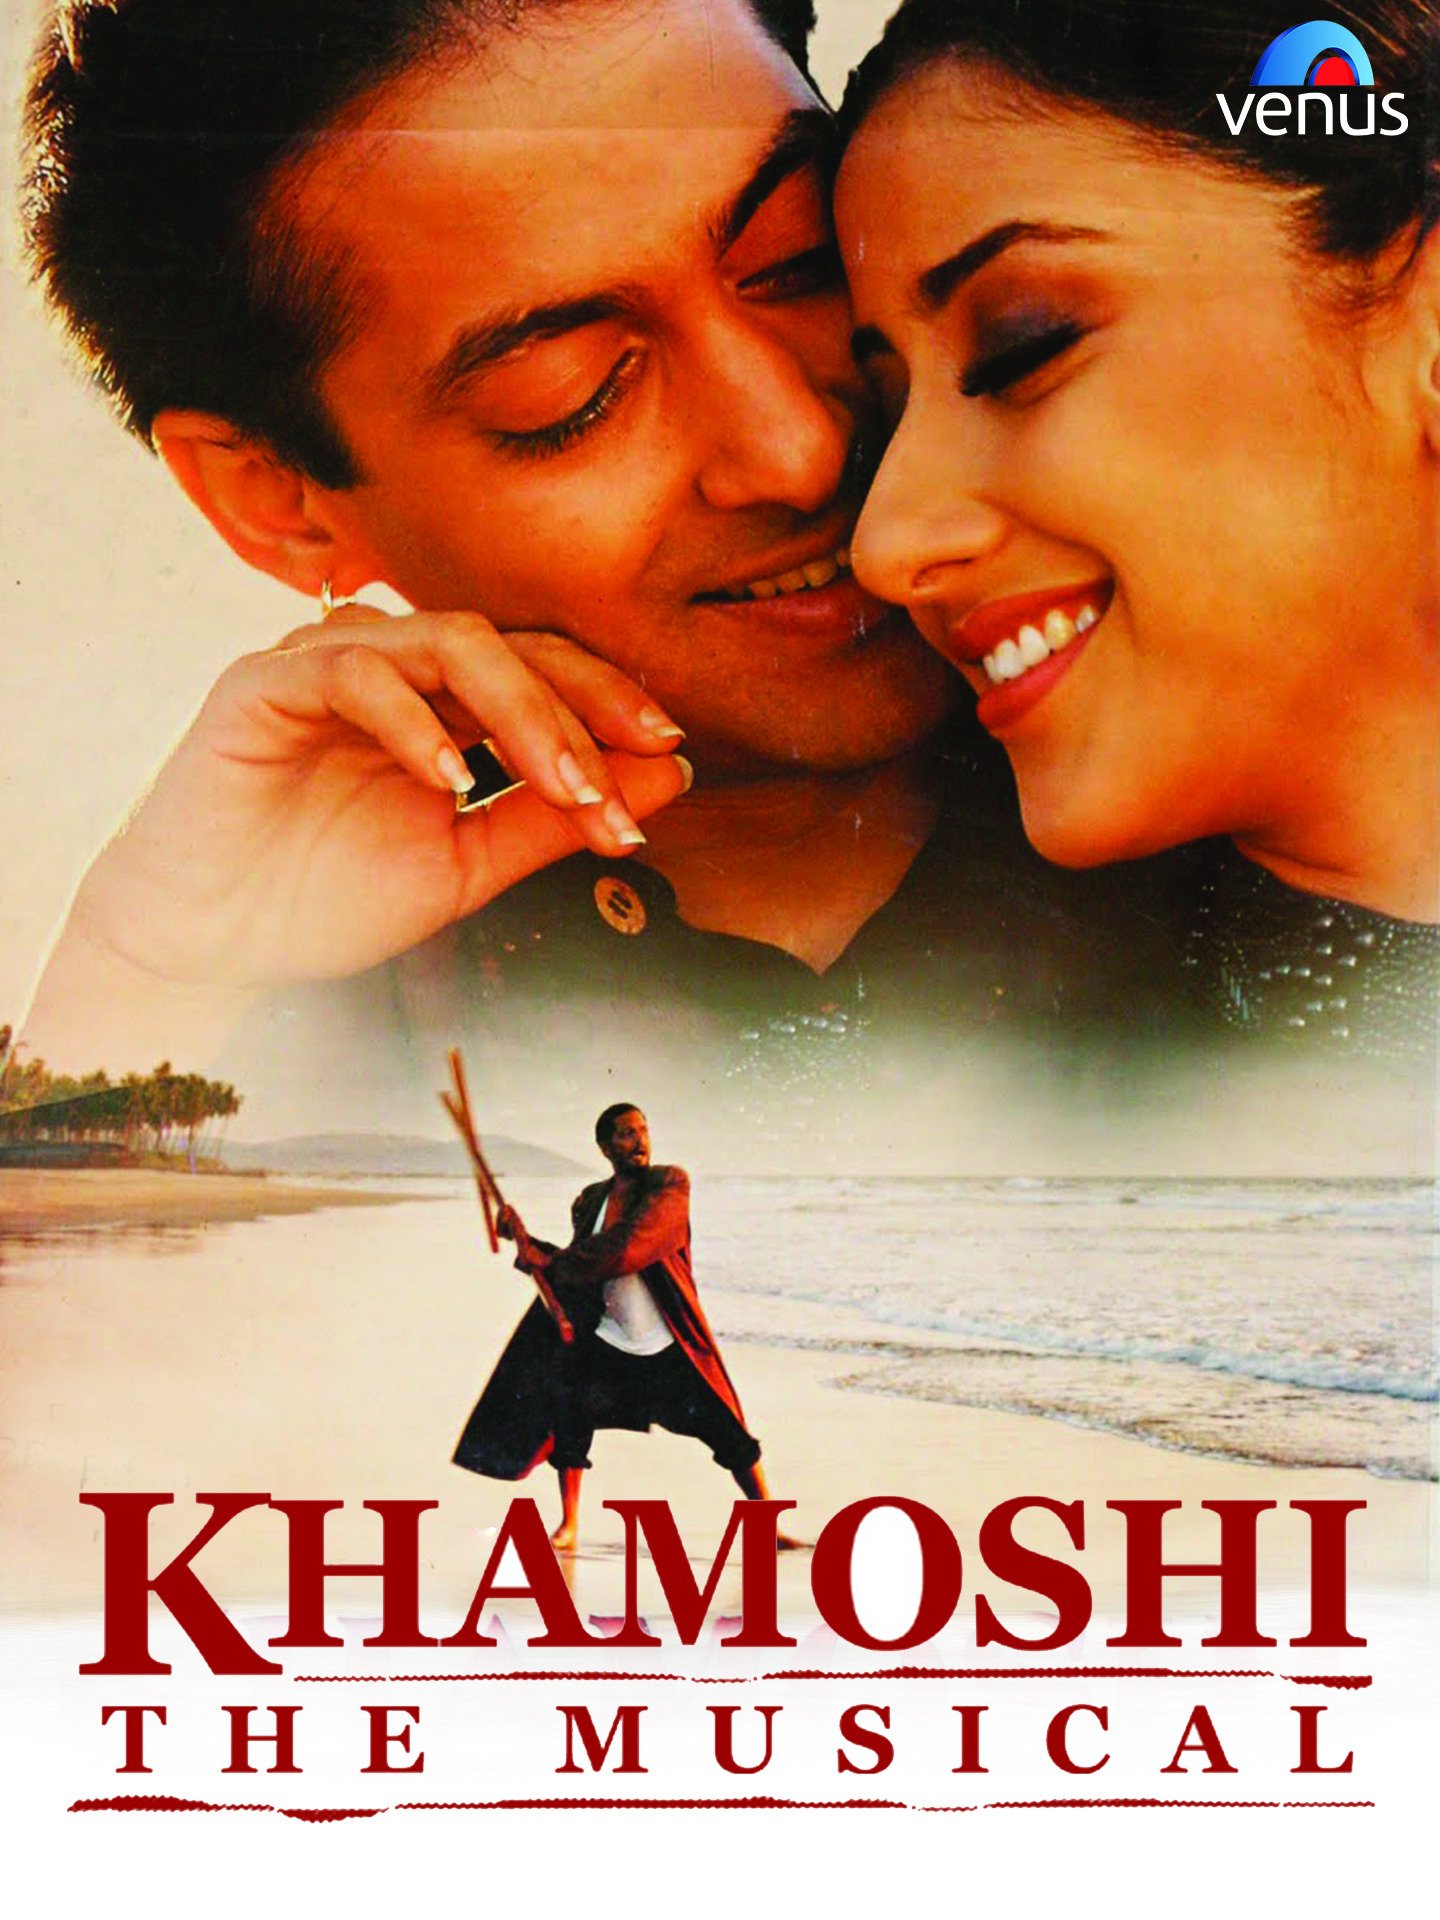 Khamoshi-The Musical (1996)